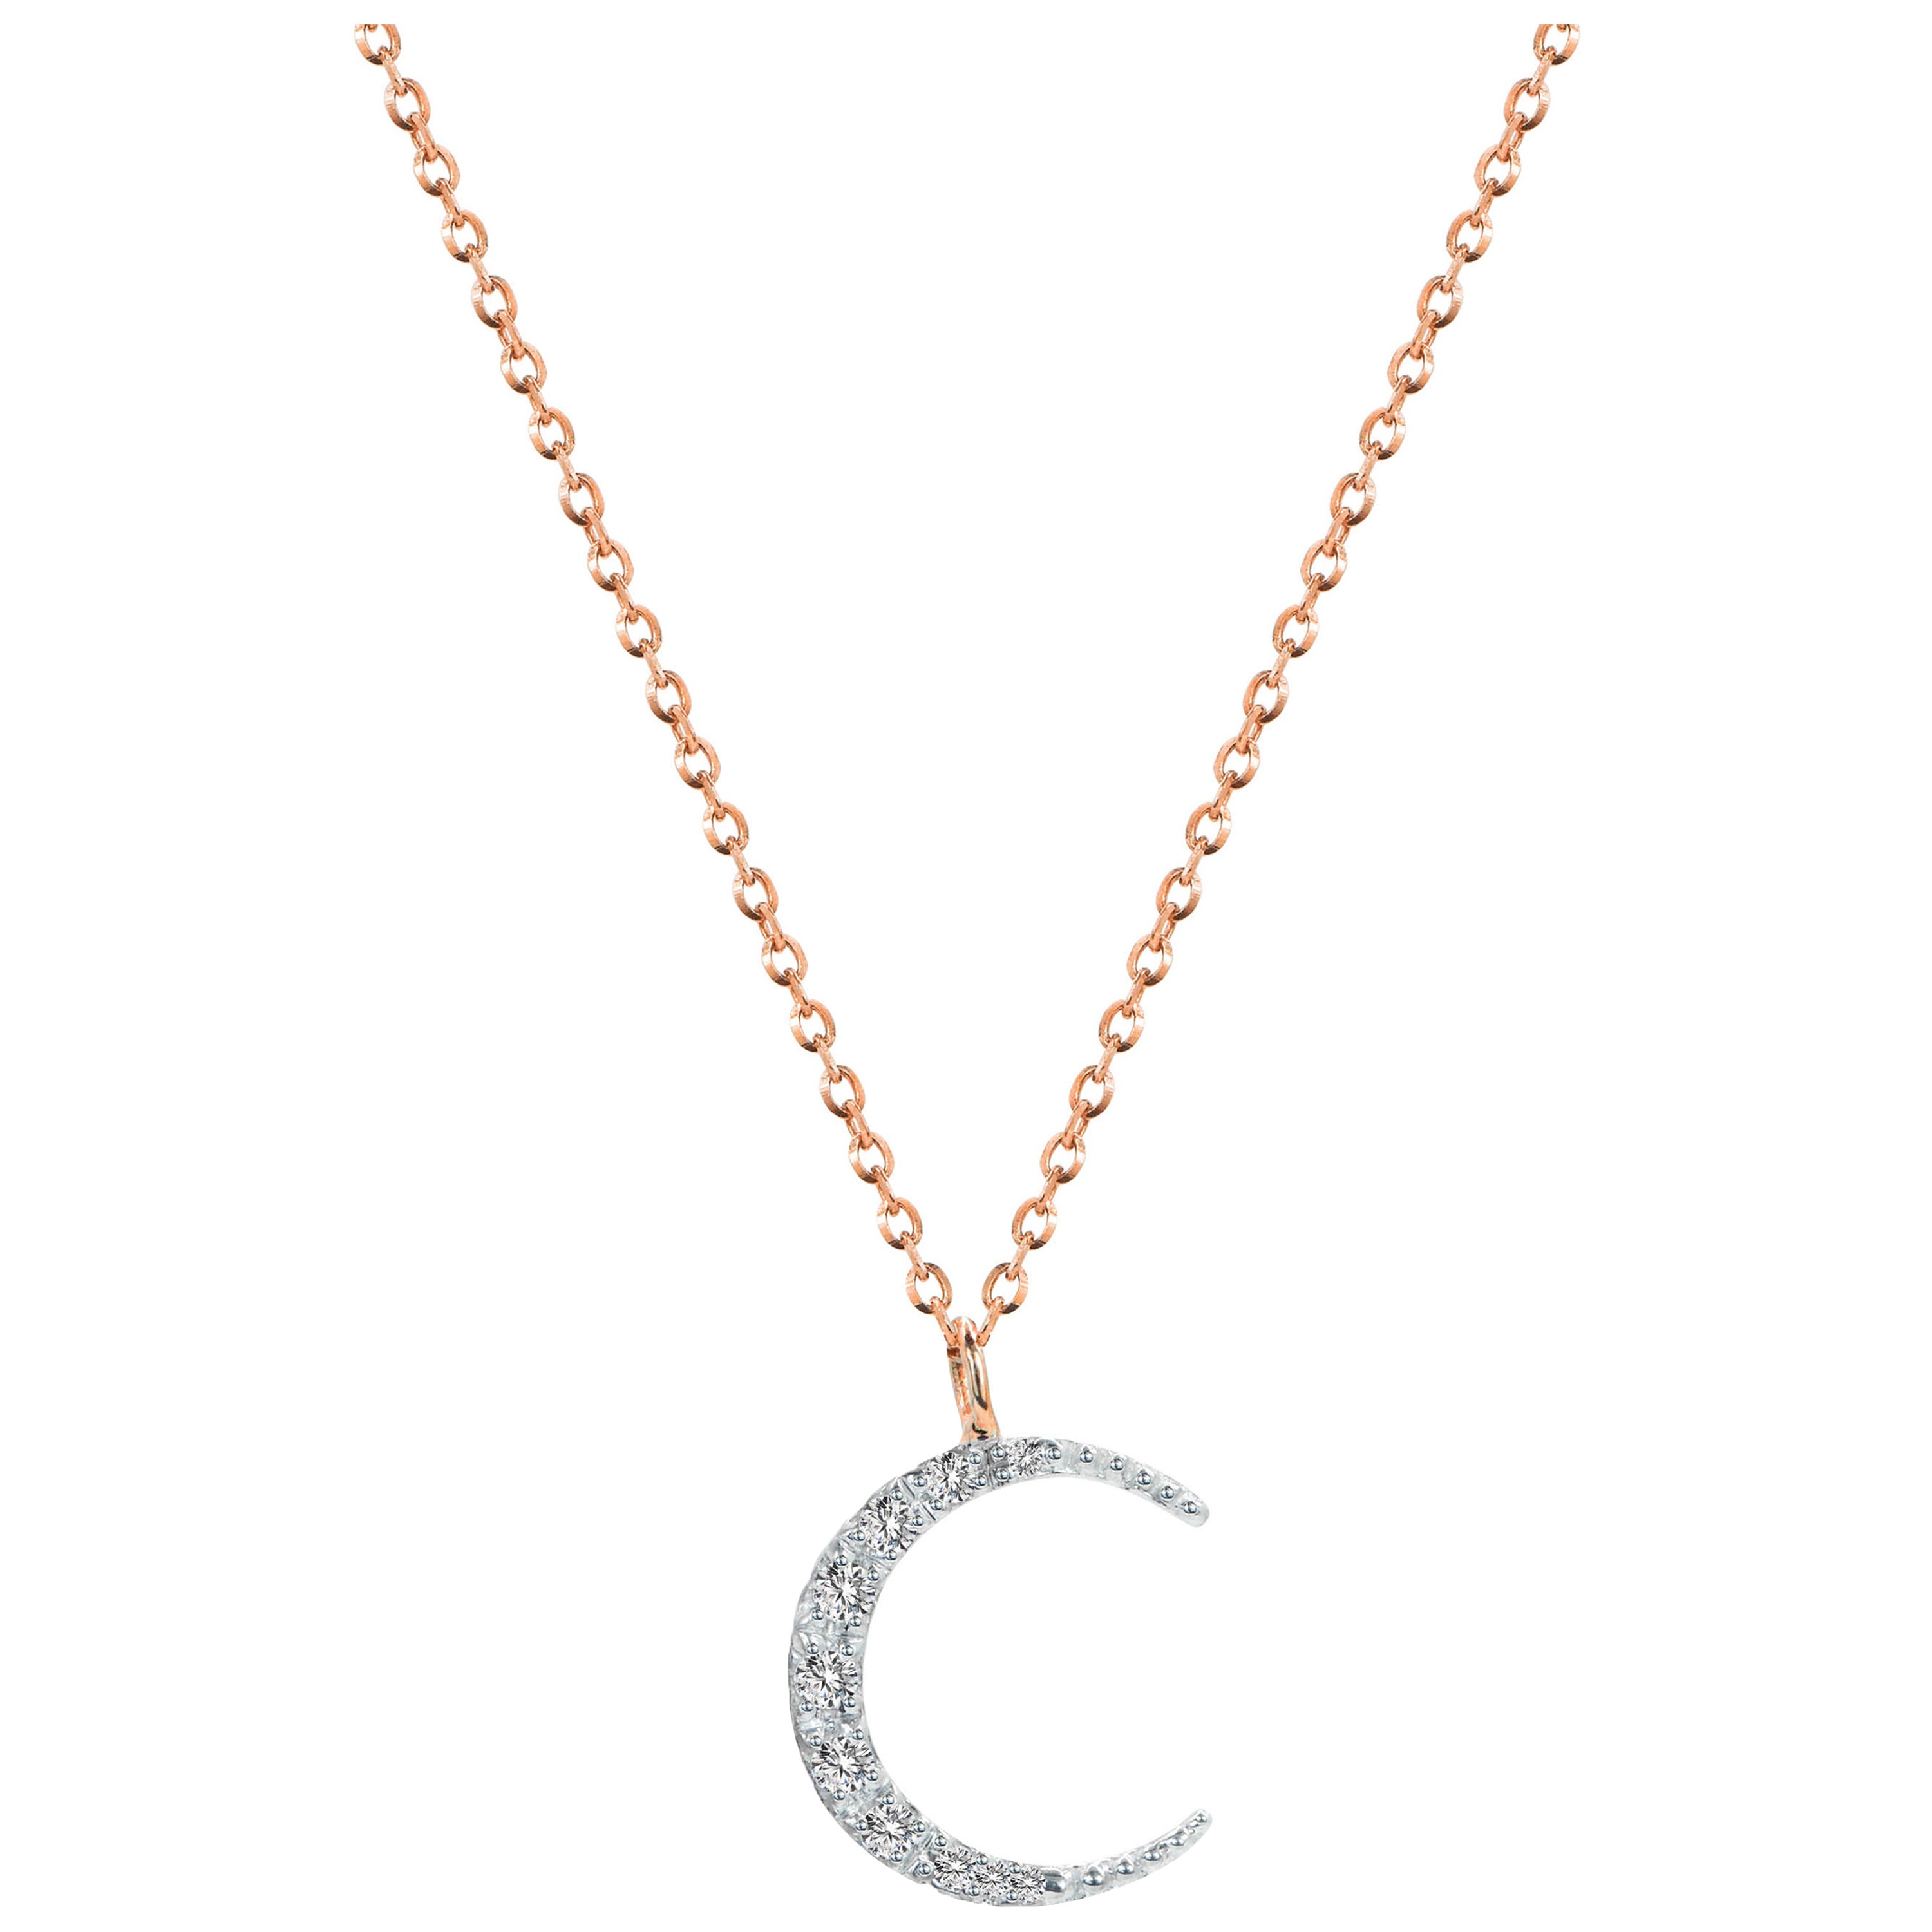 14k Gold Crescent Half Moon Diamond Necklace